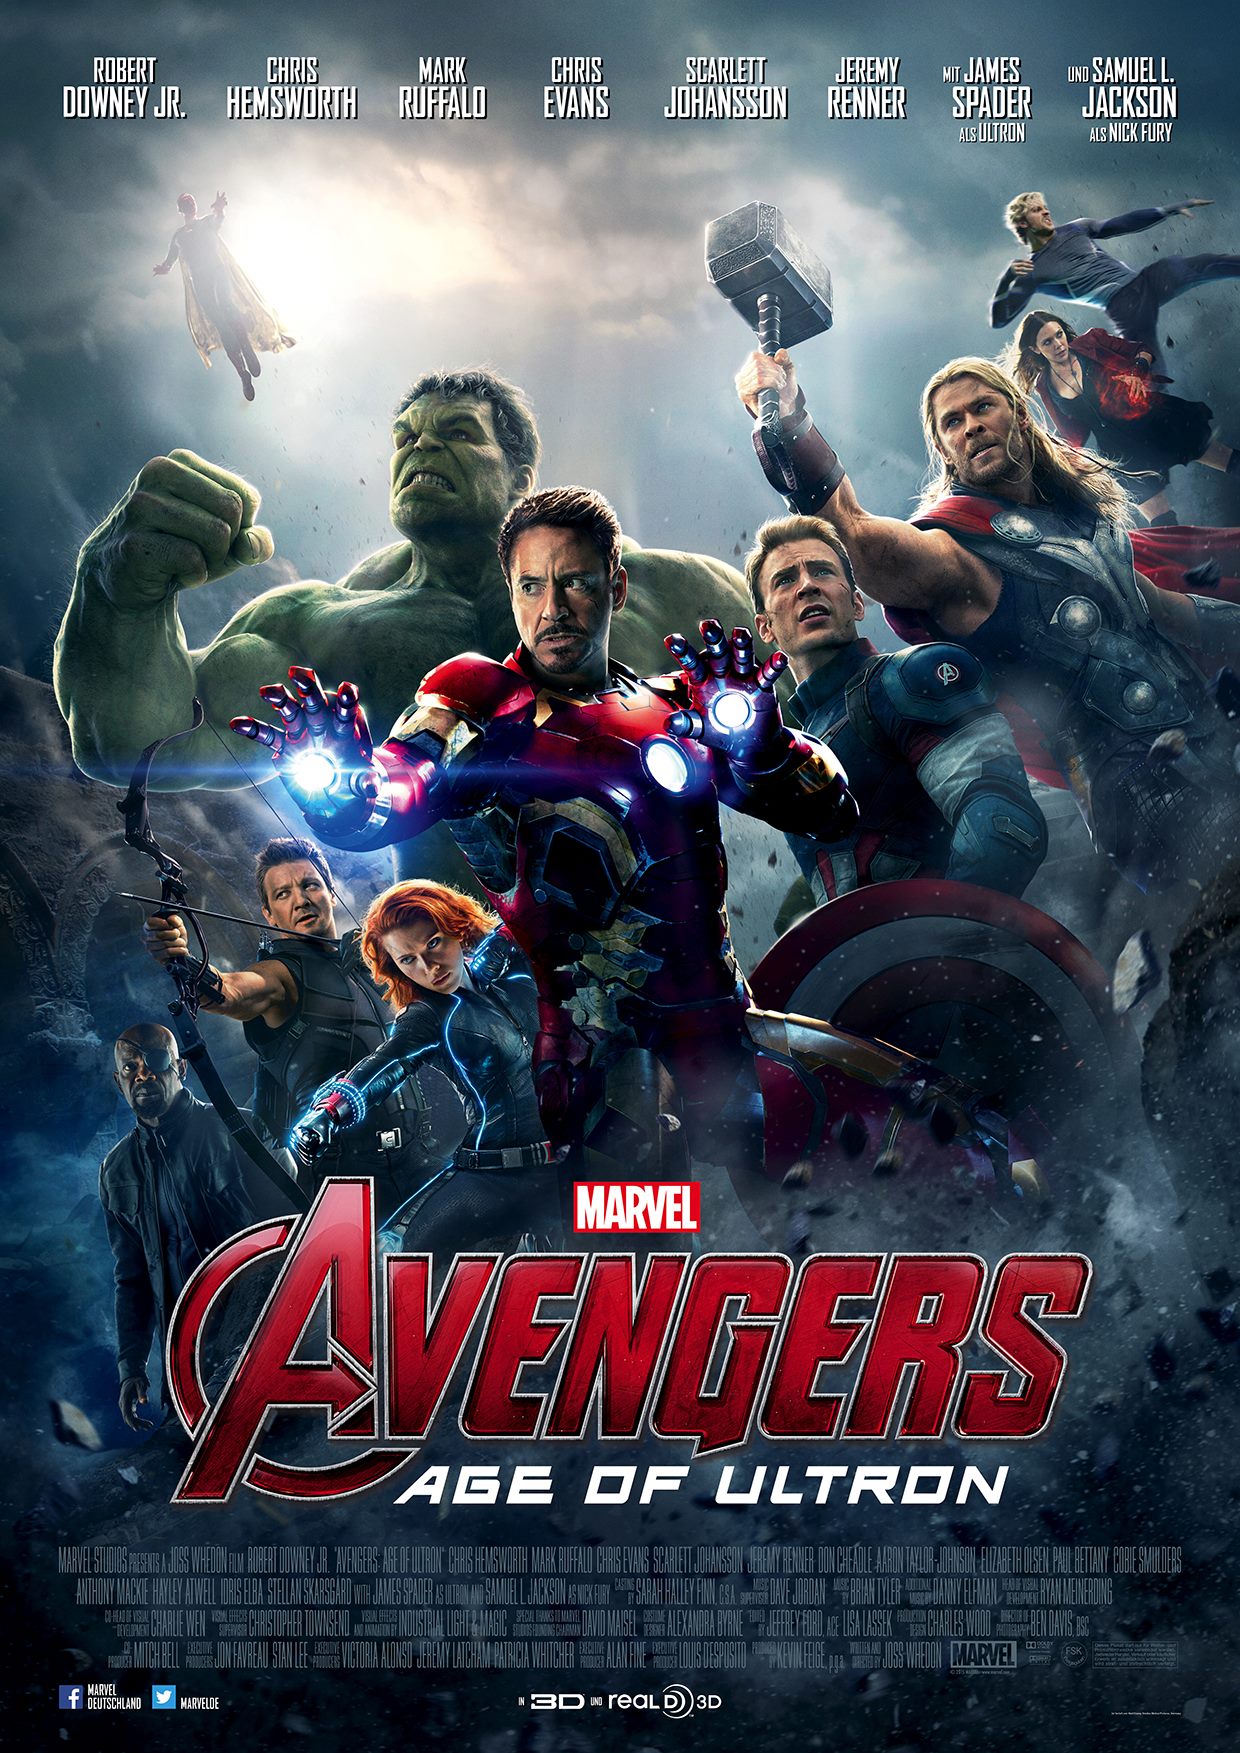 Avengers-Age-of-Ultron-Poster-02.jpg